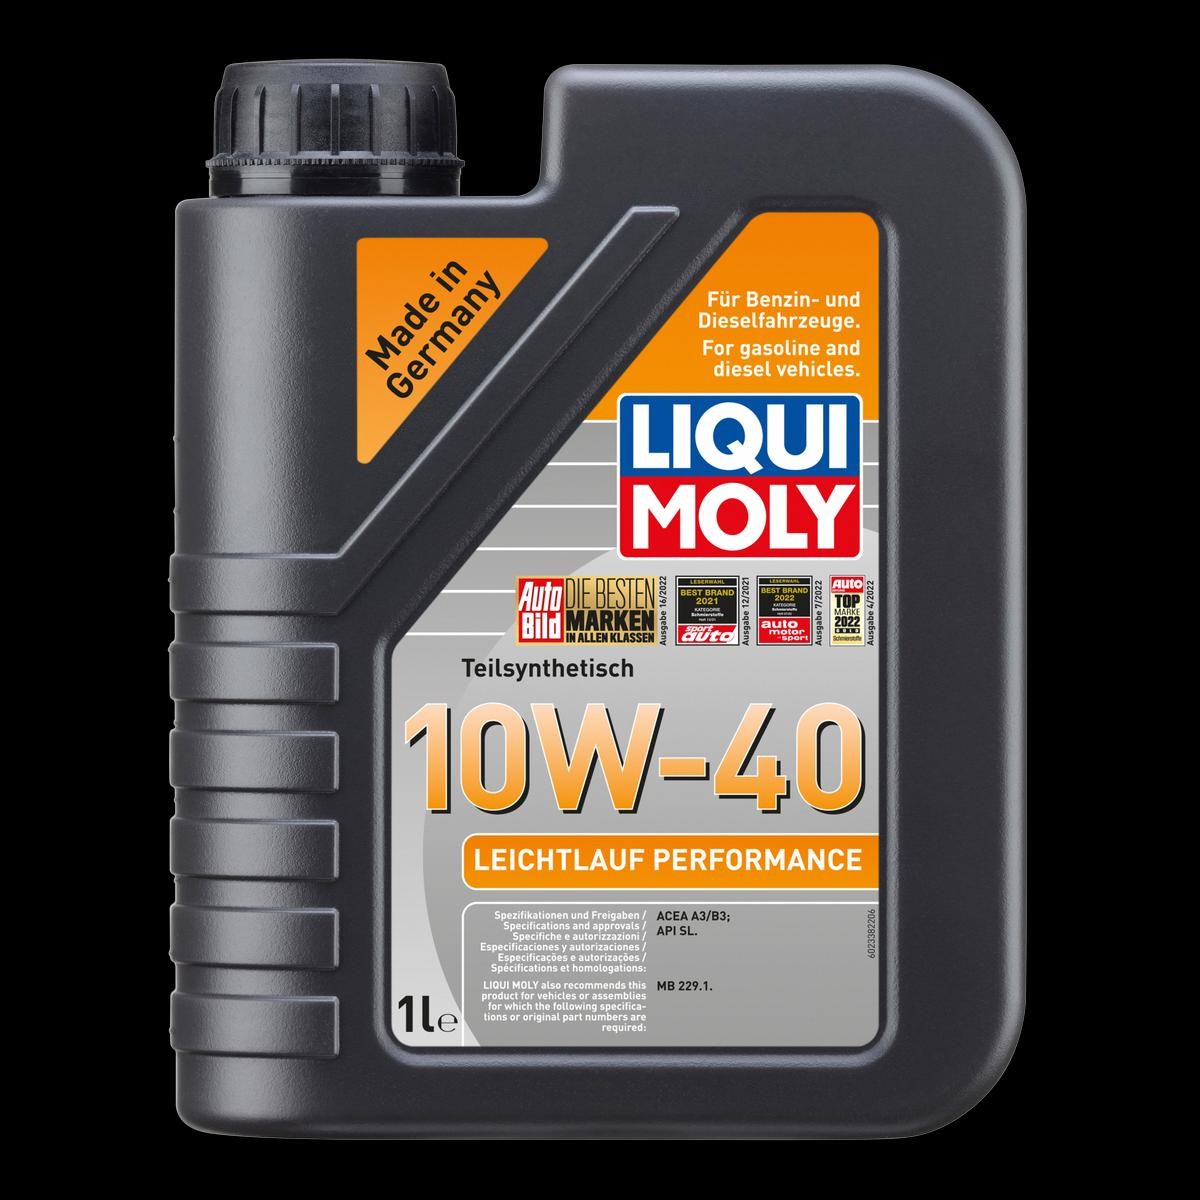 LIQUI MOLY Motorbike 4T, Street 2338 Engine oil 10W-40, 1l, Part Synthetic Oil